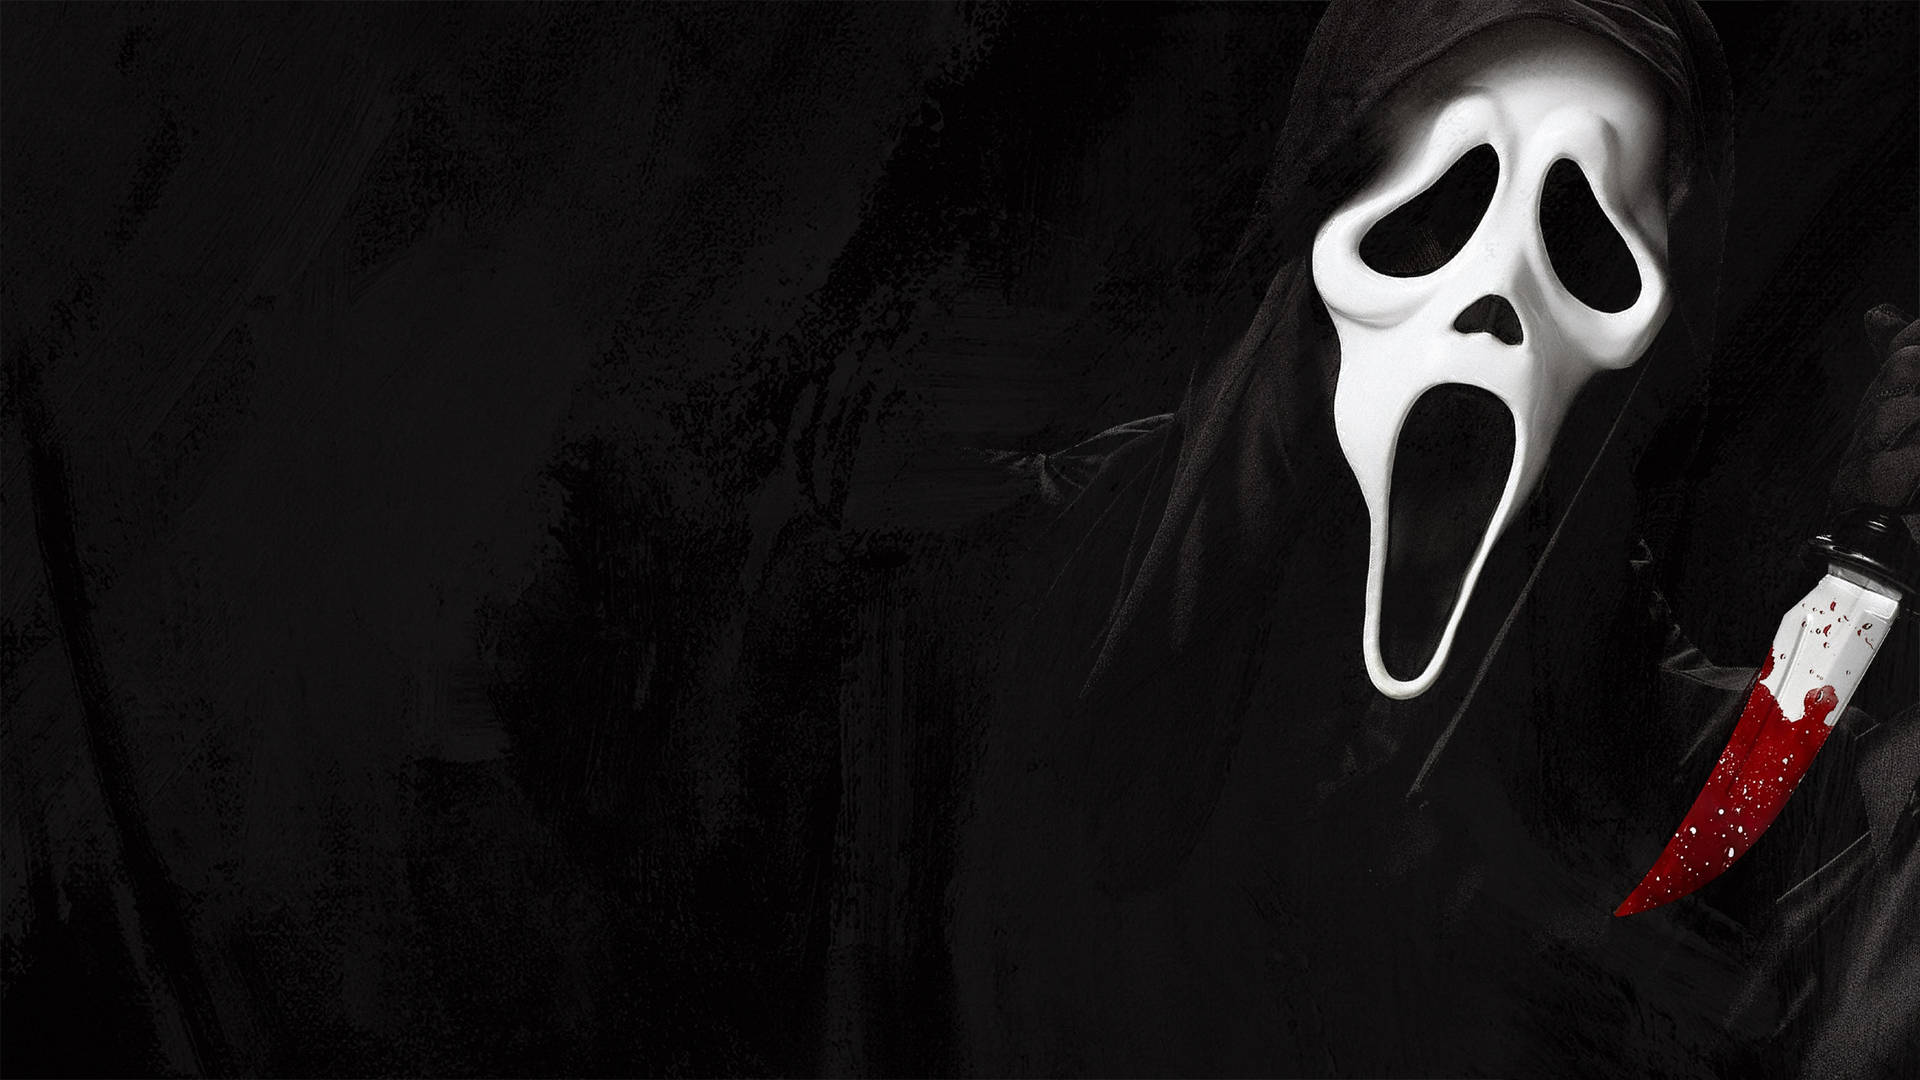 Free Ghostface Wallpaper Downloads, Ghostface Wallpaper for FREE